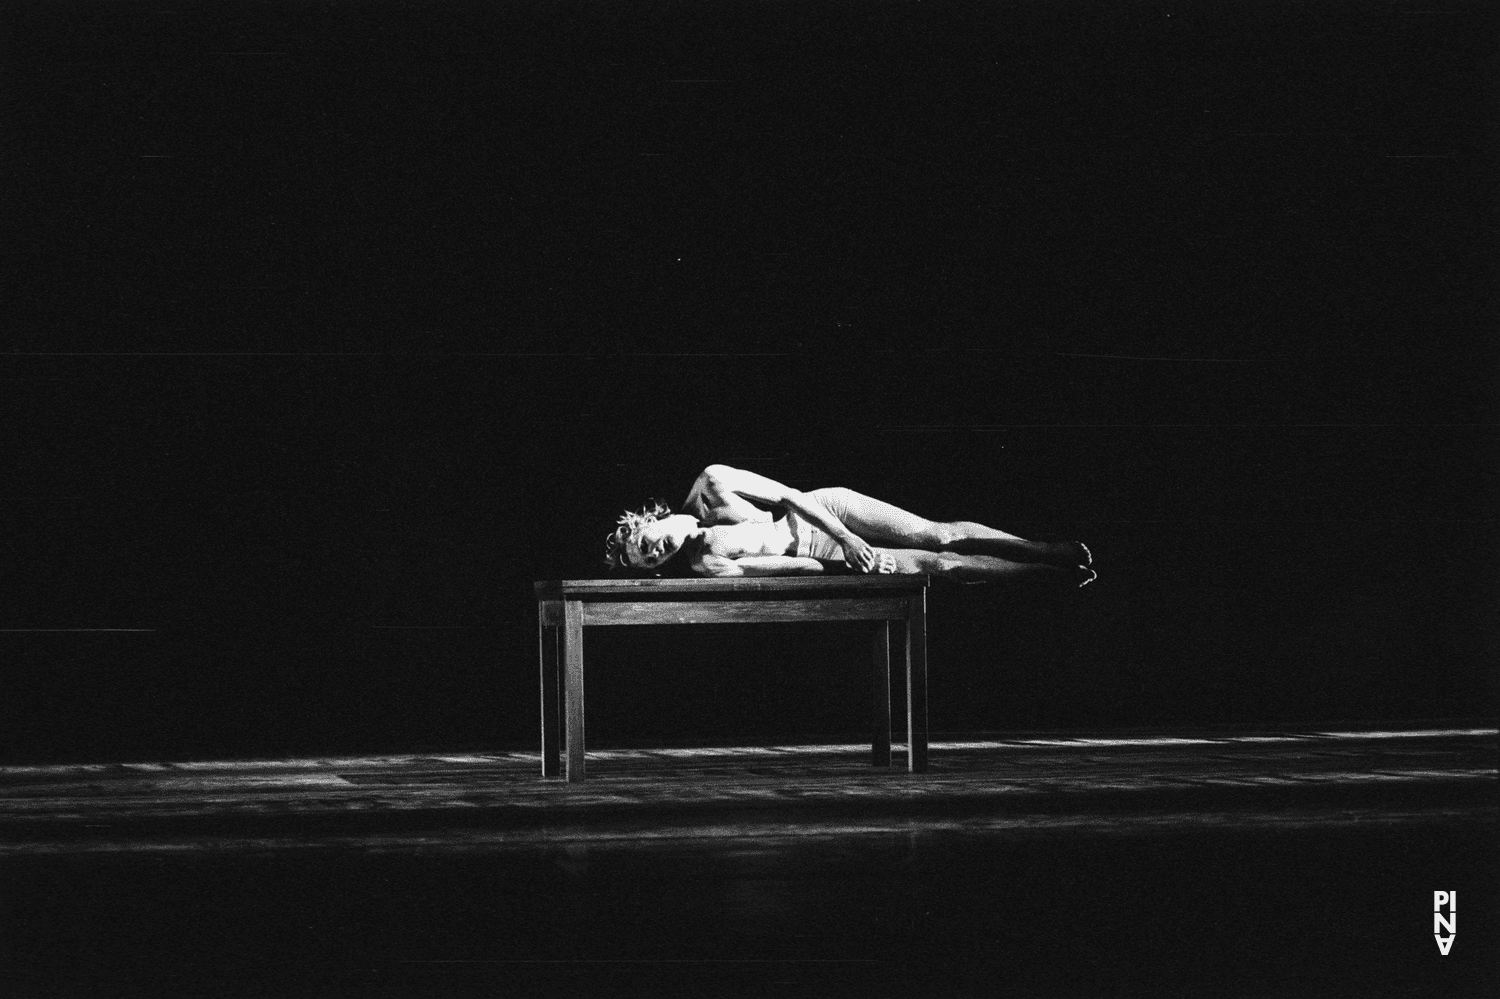 Dominique Mercy dans « Iphigenie auf Tauris » de Pina Bausch avec Tanztheater Wuppertal à l'Opernhaus Wuppertal (Allemagne), 20 avril 1974